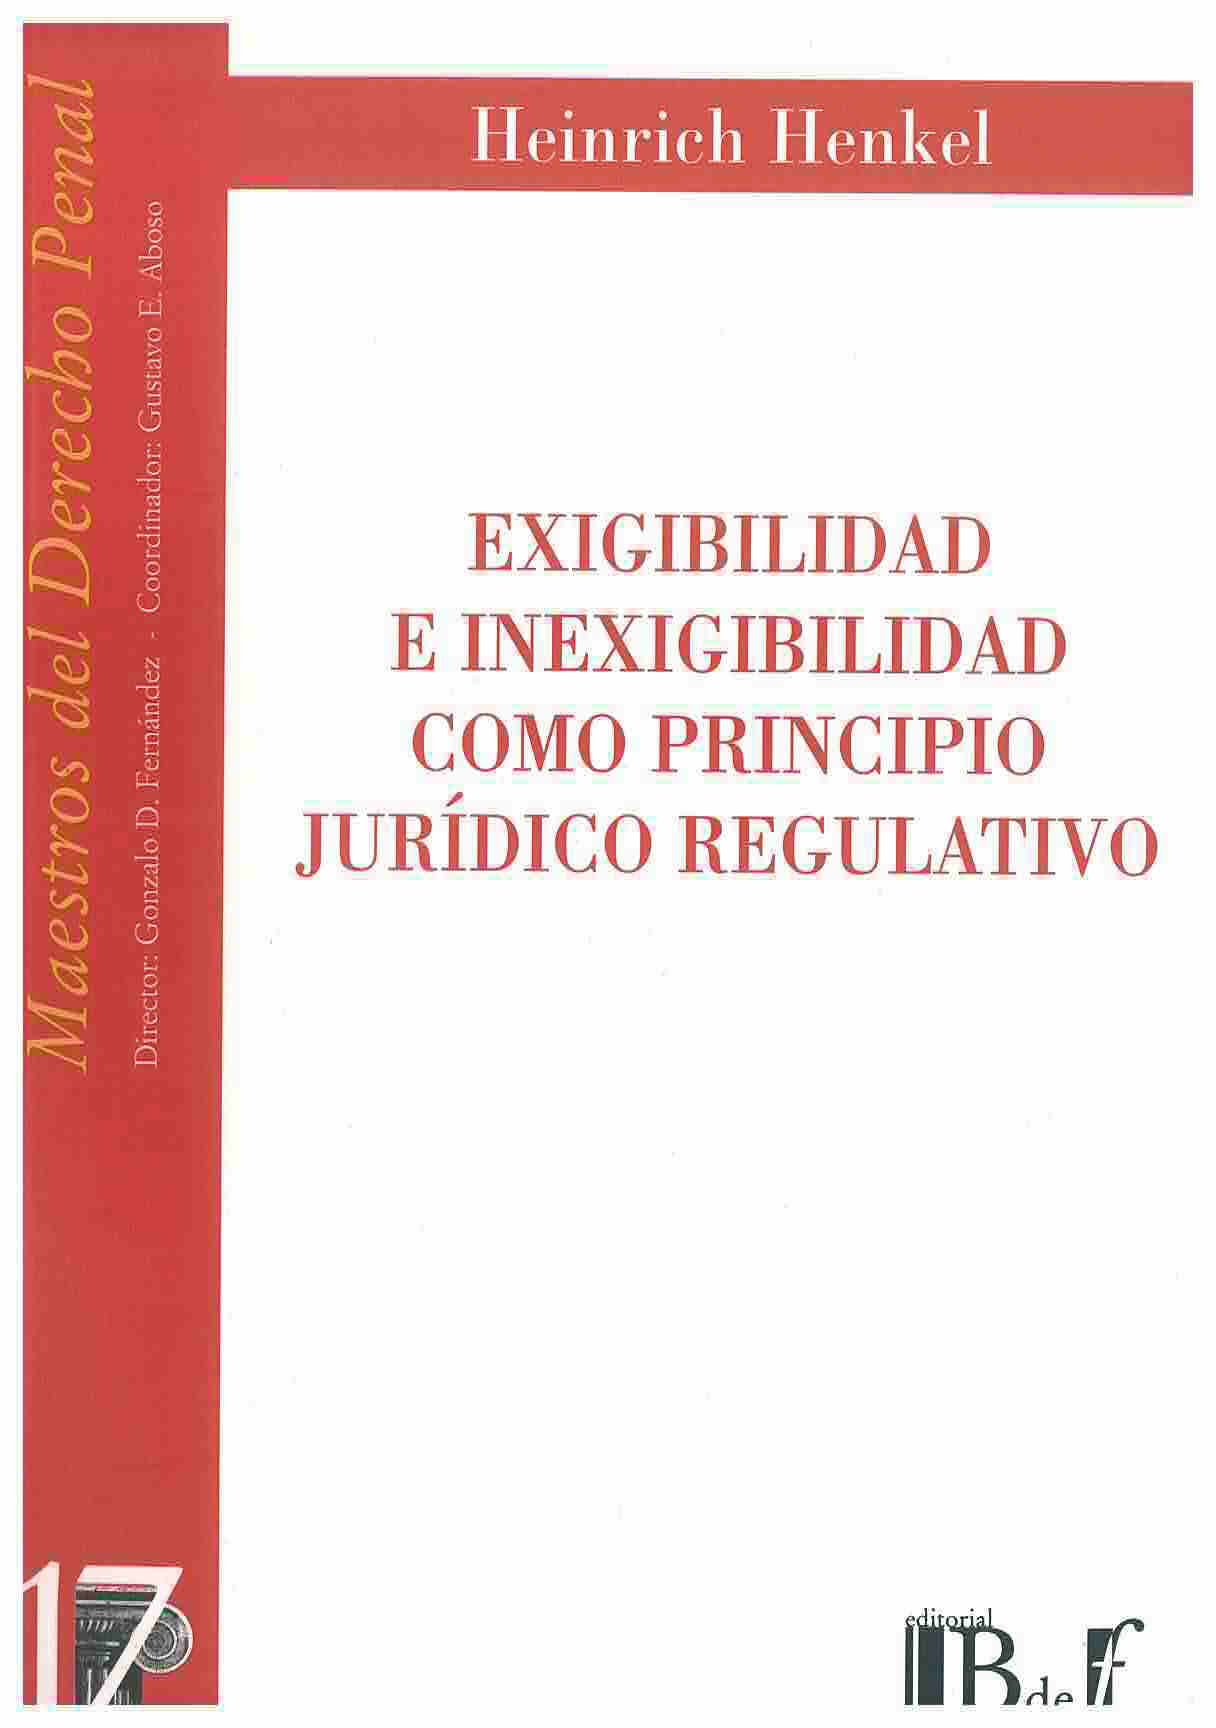 Exigibilidad e inexigibilidad como principio regulatorio